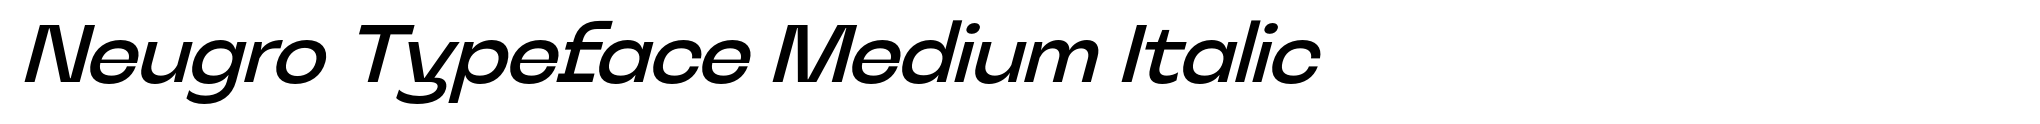 Neugro Typeface Medium Italic image